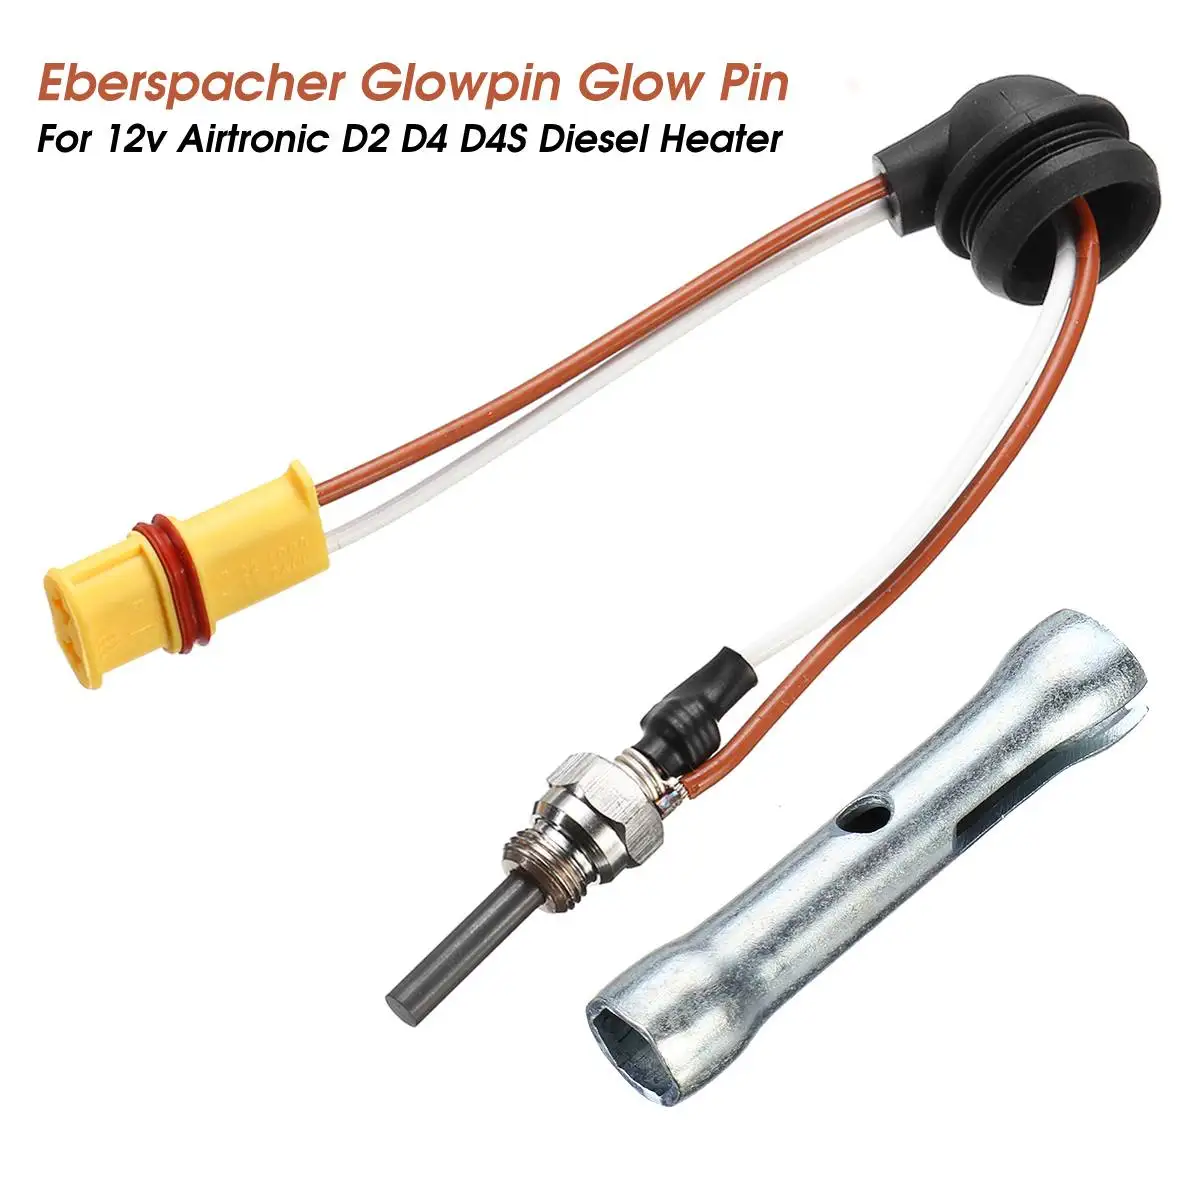 12V для Eberspacher glowpin стержень накаливания штекер 1000-8000KVA для Airtronic D2 D4 D4S Дизели нагреватель w/ключ, дюймовый стандарт